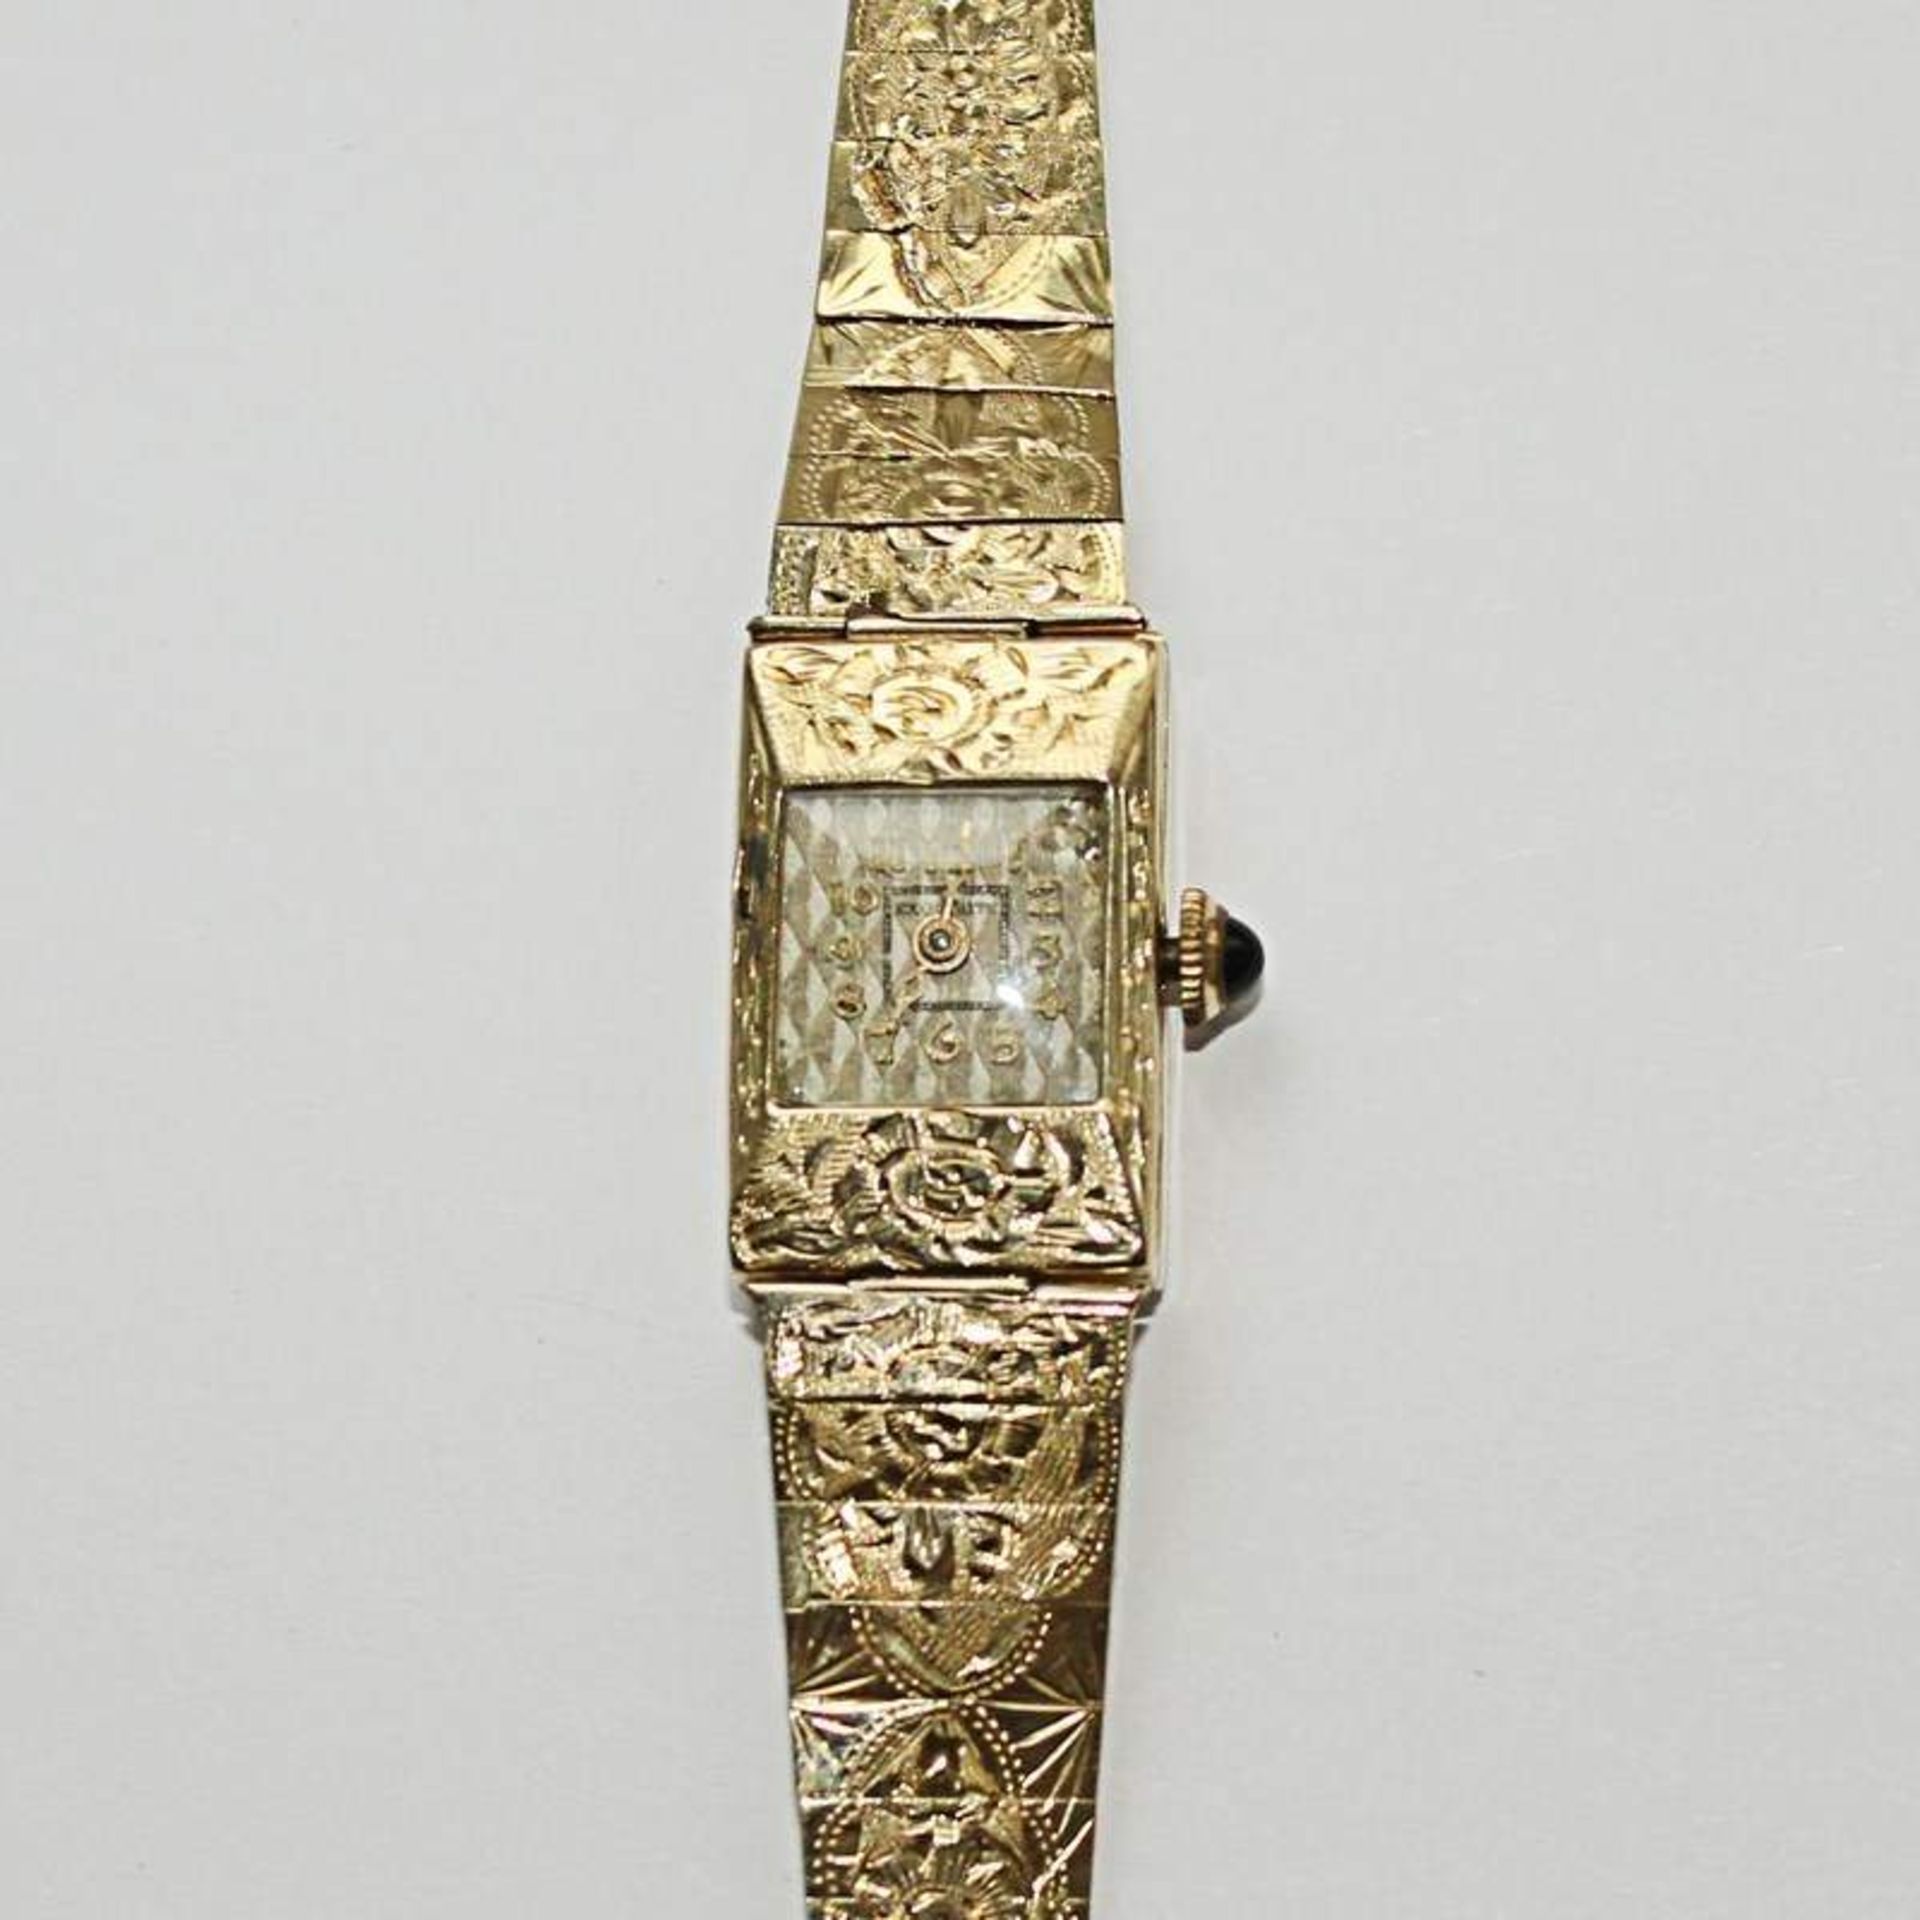 Damenarmbanduhr - Exquisite um 1900, GG 585, rechteckiges Gehäuse, ca.2x1,4cm, silberfarbenes